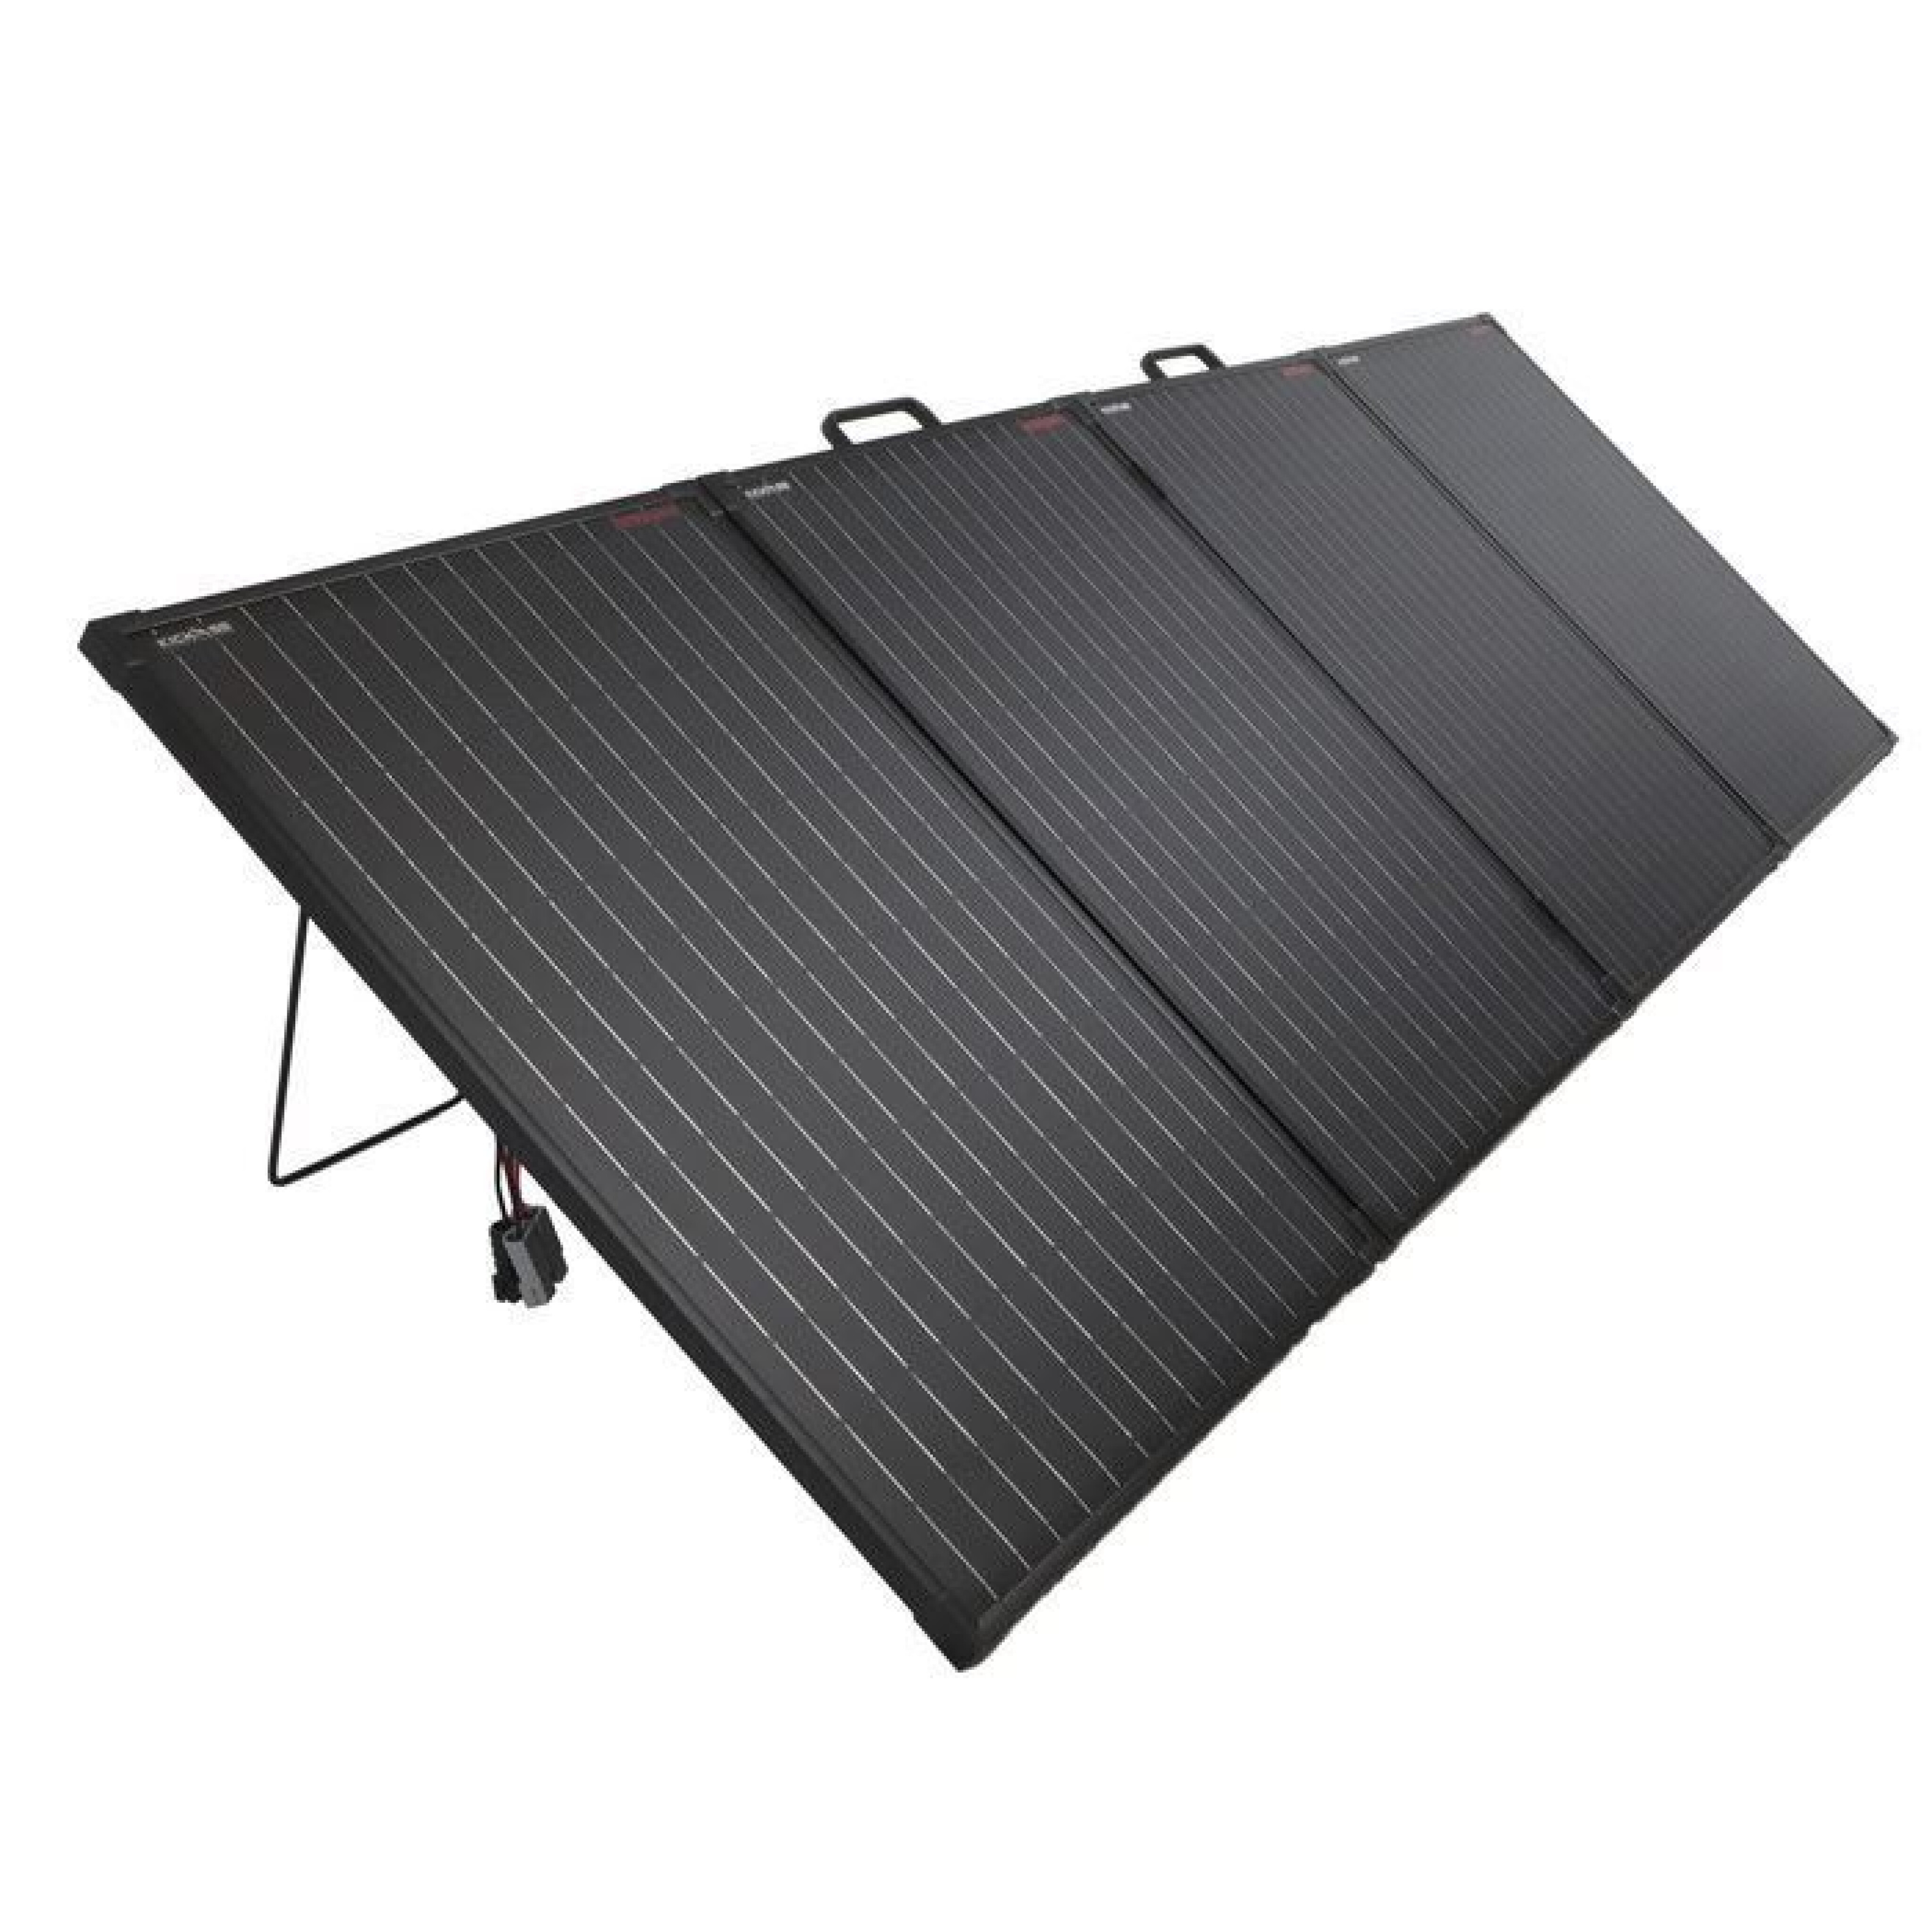 b95509f7105/7 kickass 200w folding solar panel jpg